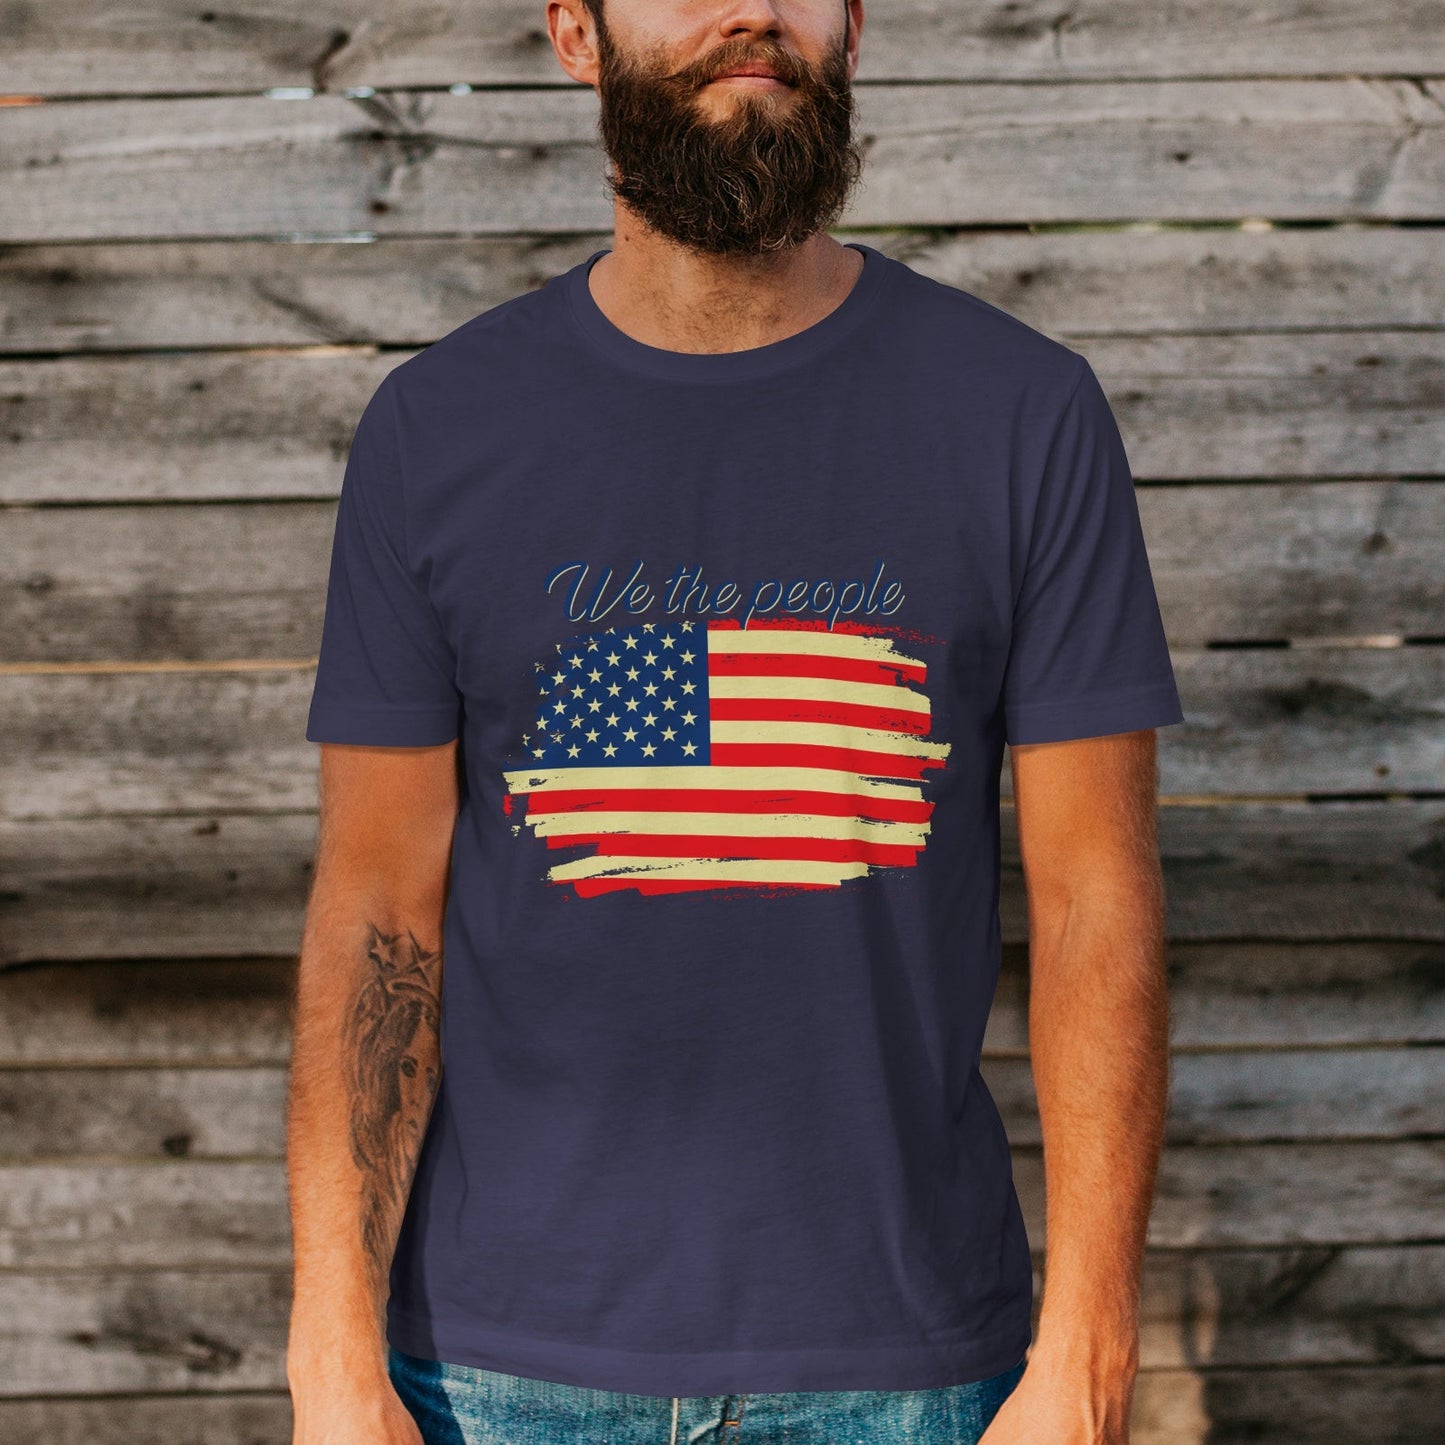 Unisex Short Sleeve Crew Neck Cotton Jersey T-Shirt USA 26